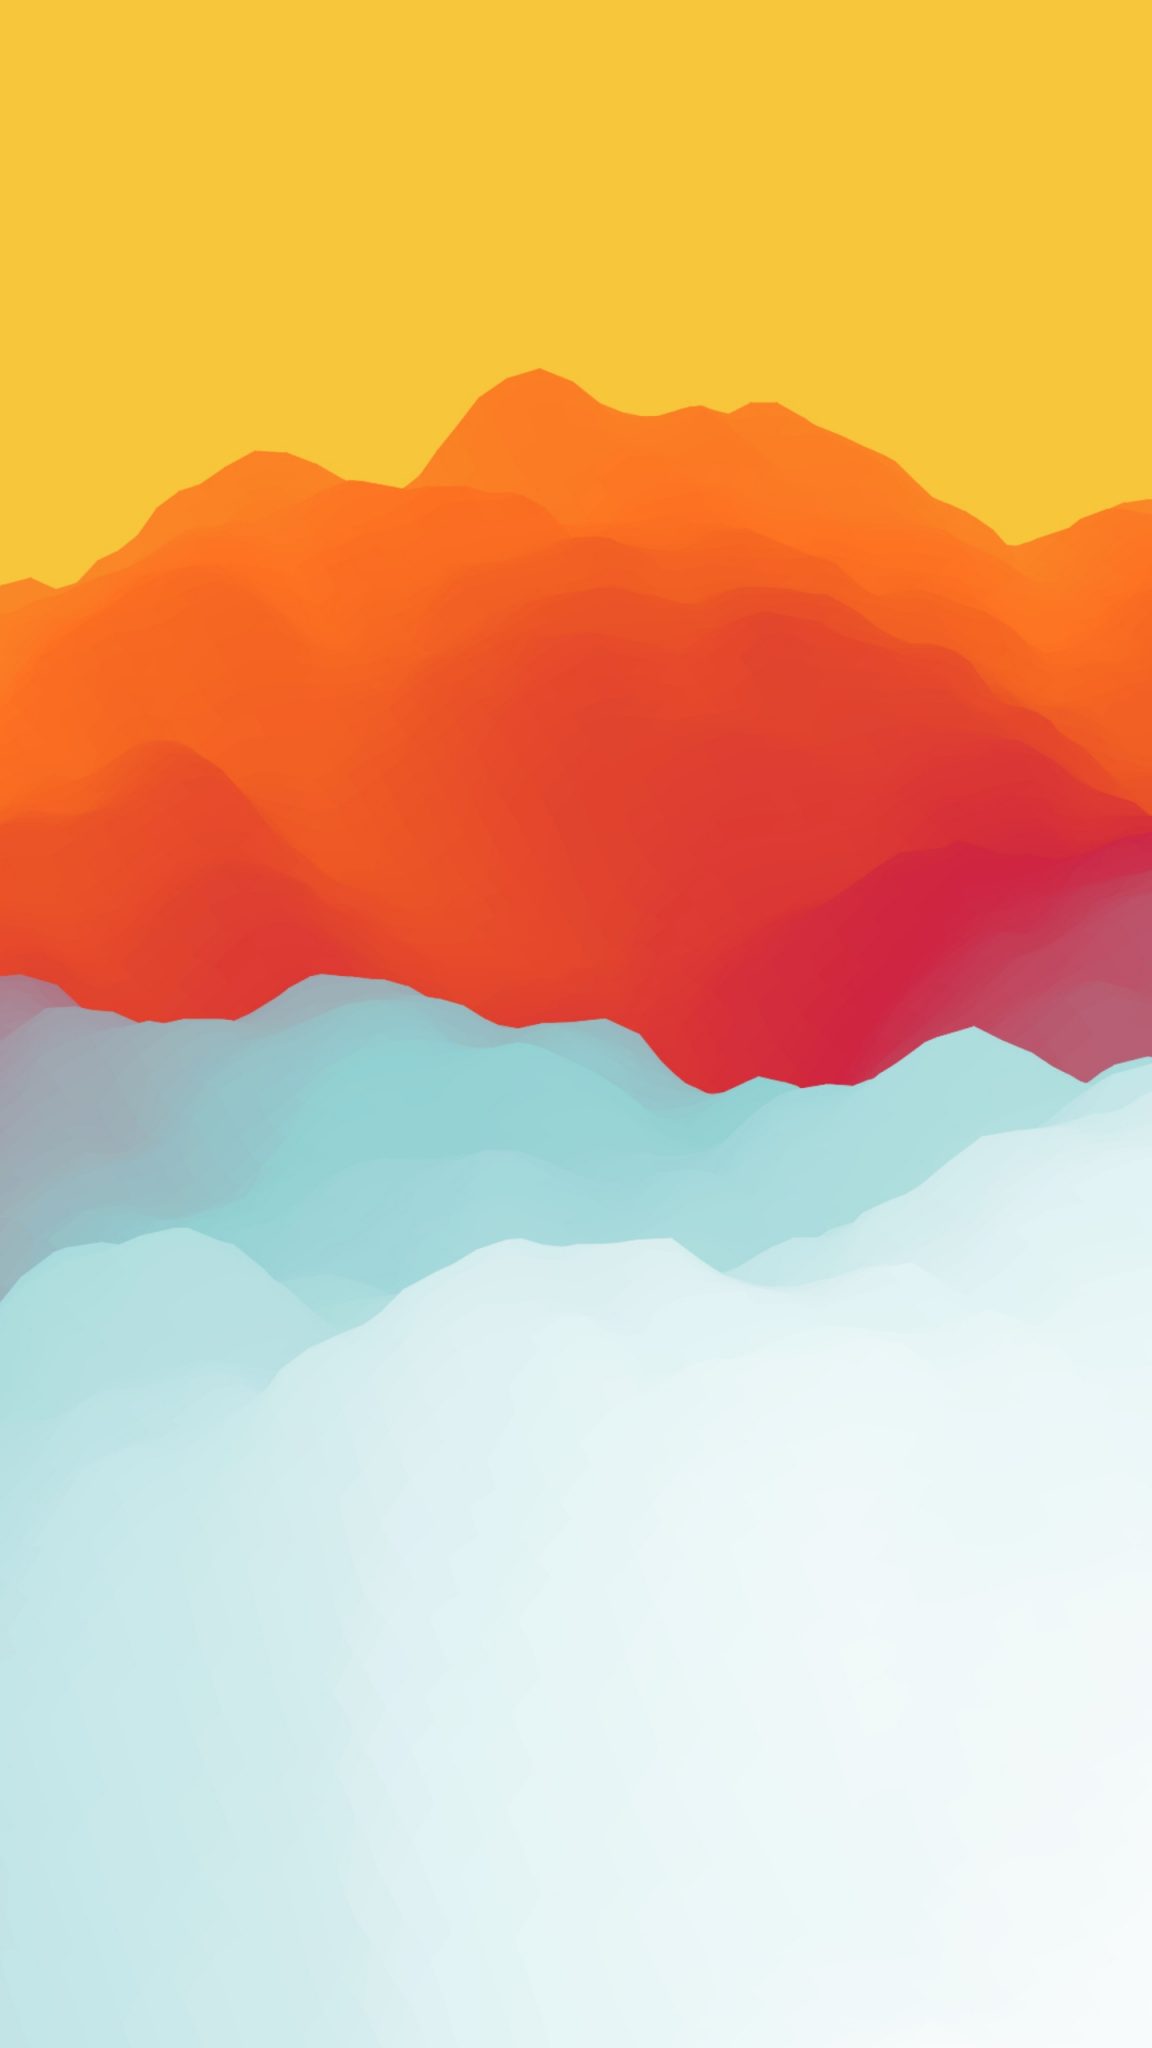 meizu wallpaper,himmel,orange,rot,atmosphäre,horizont